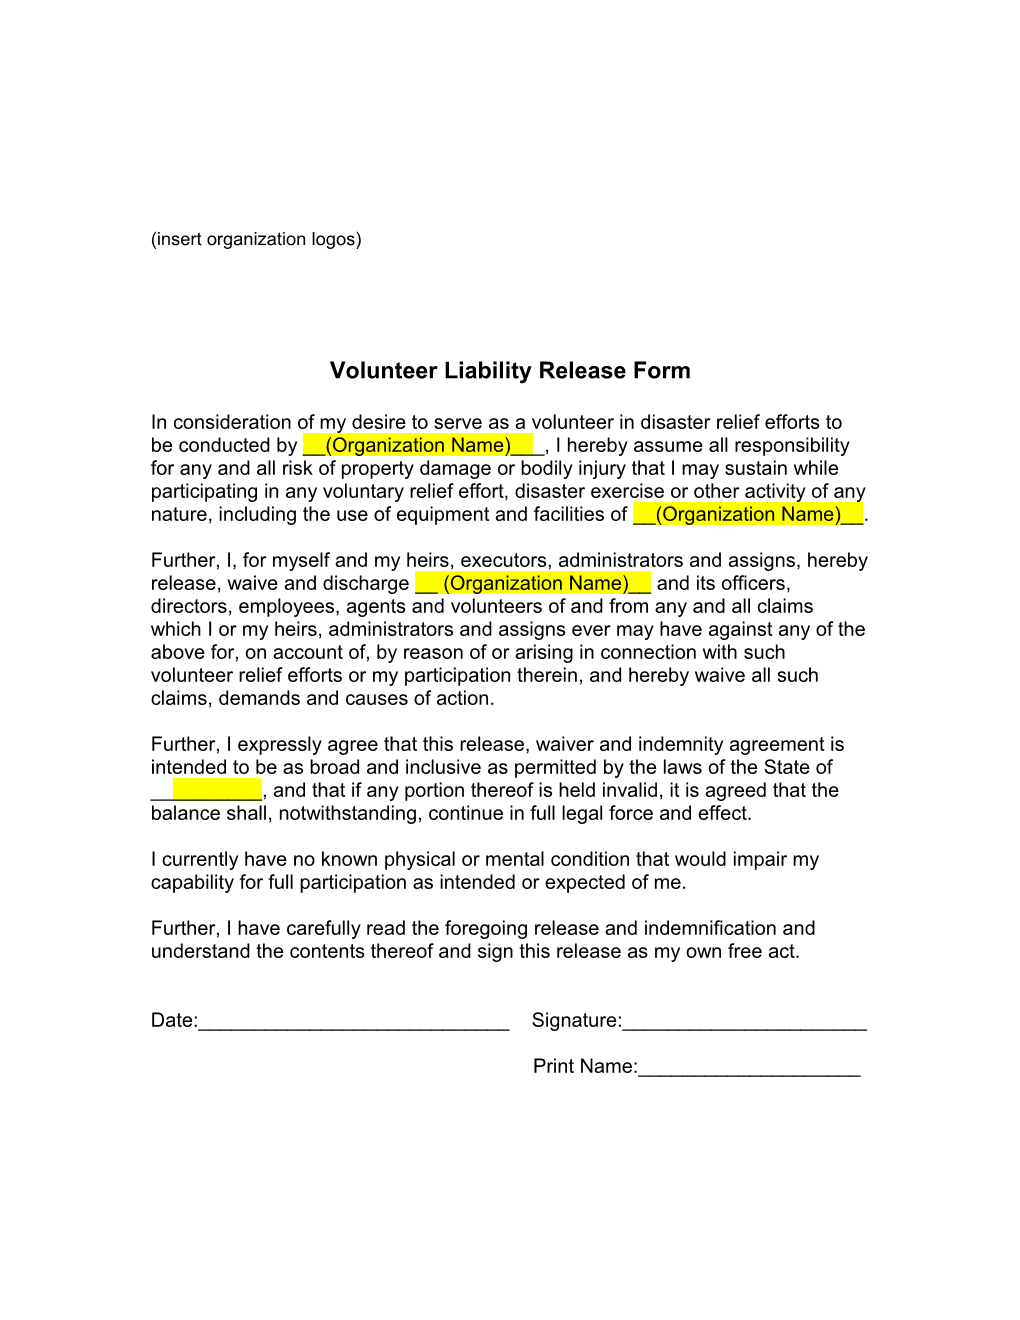 Volunteer Liability Release Form